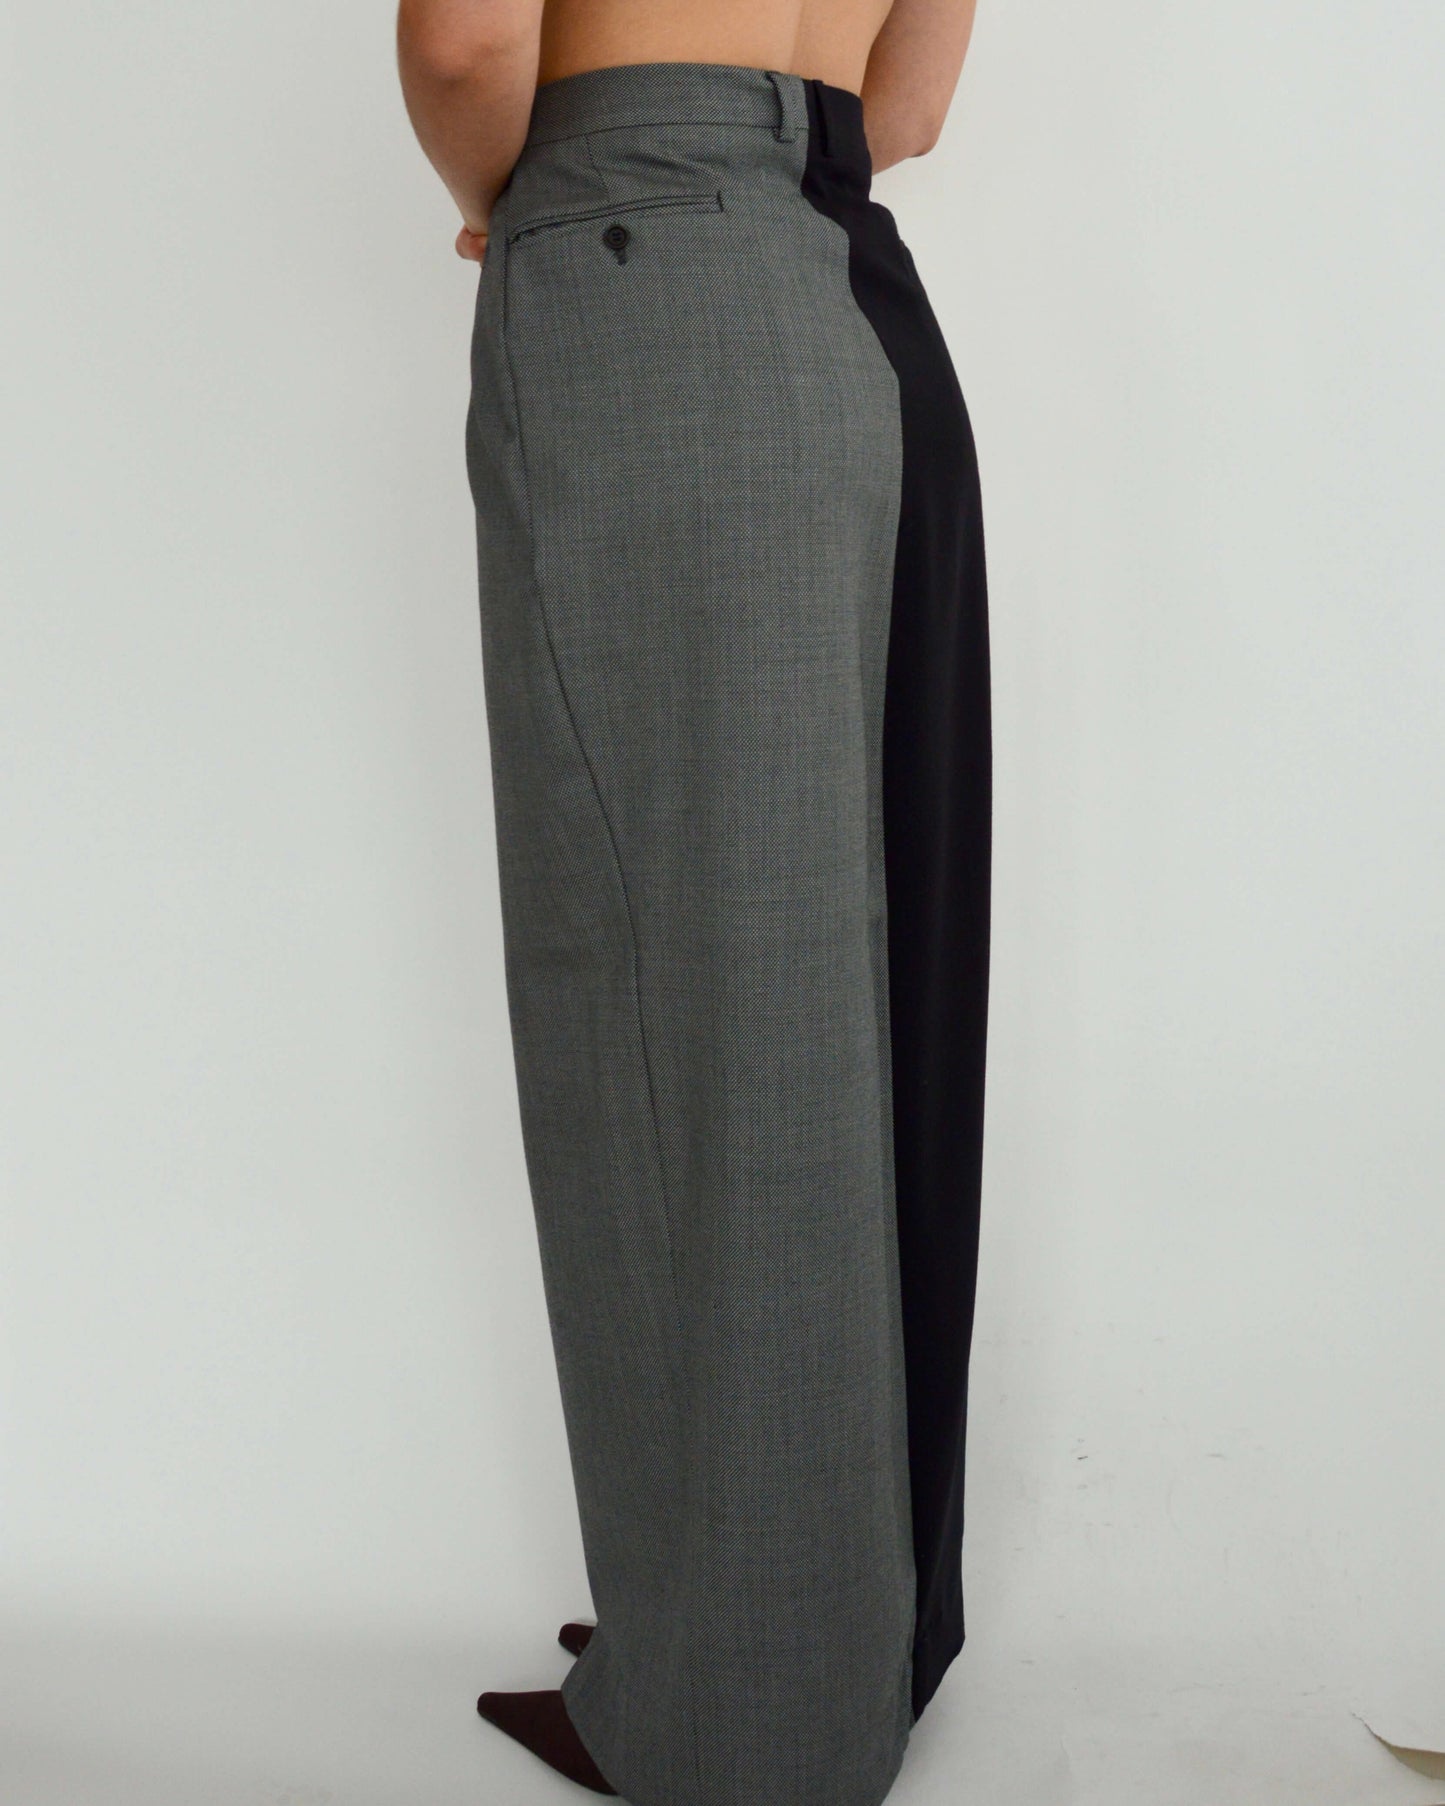 DUO Long Skirt - Grey on Top (L/XL)